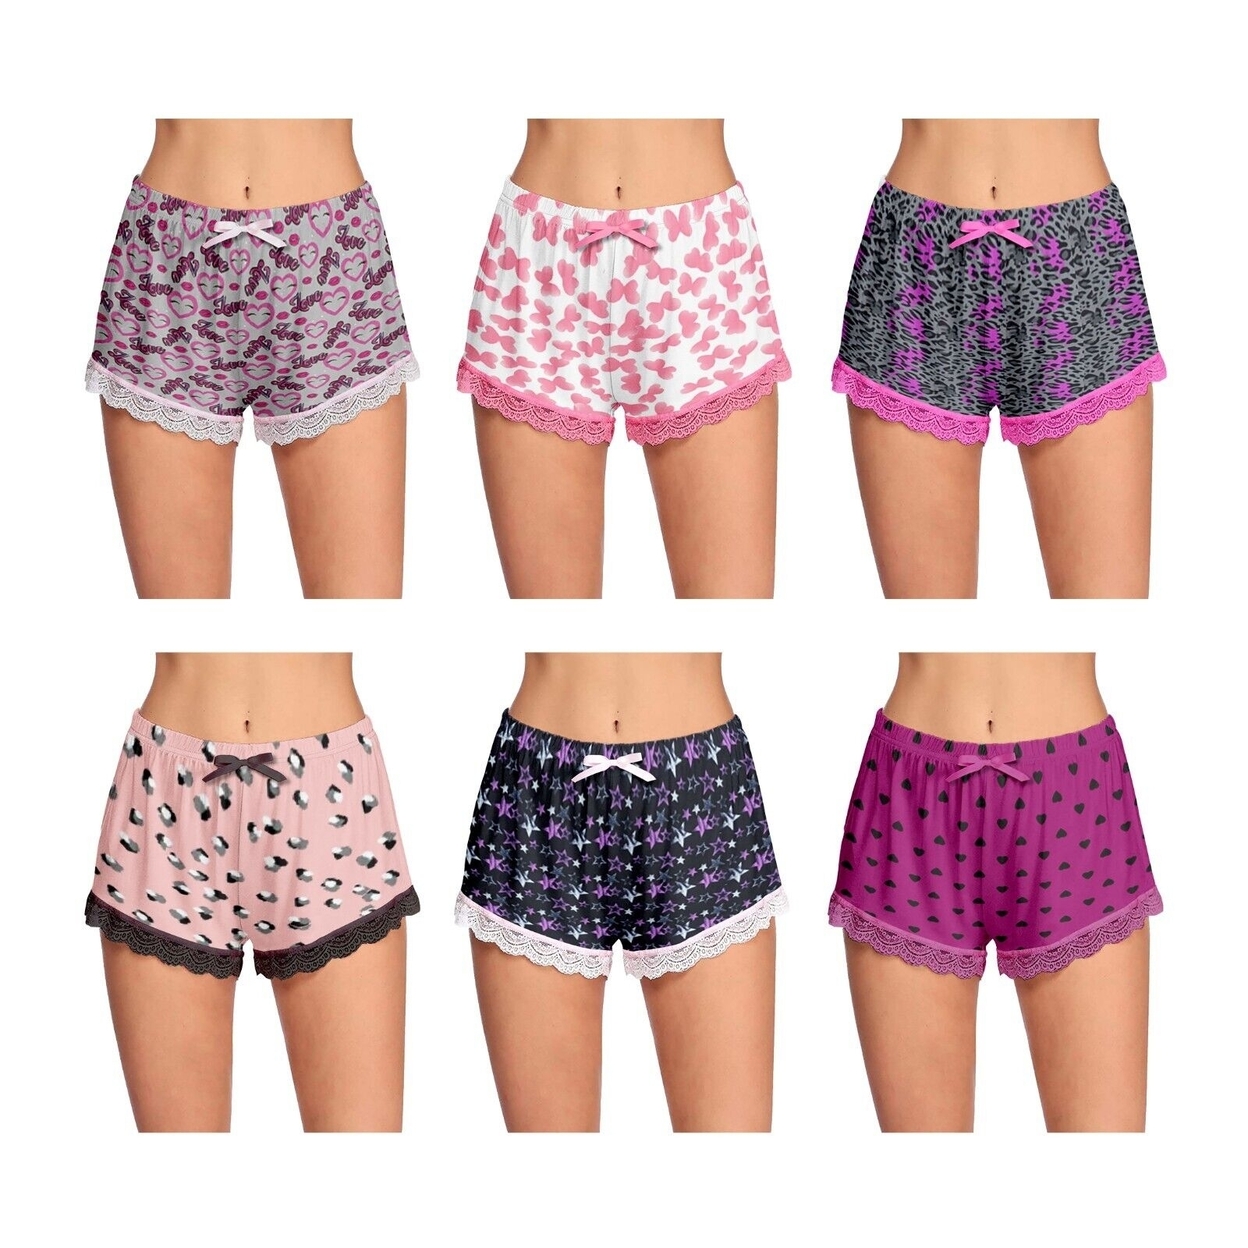 3-Pack: Women's Ultra-Soft Cozy Fun Printed Lace Trim Pajama Lounge Shorts - Large, Animal